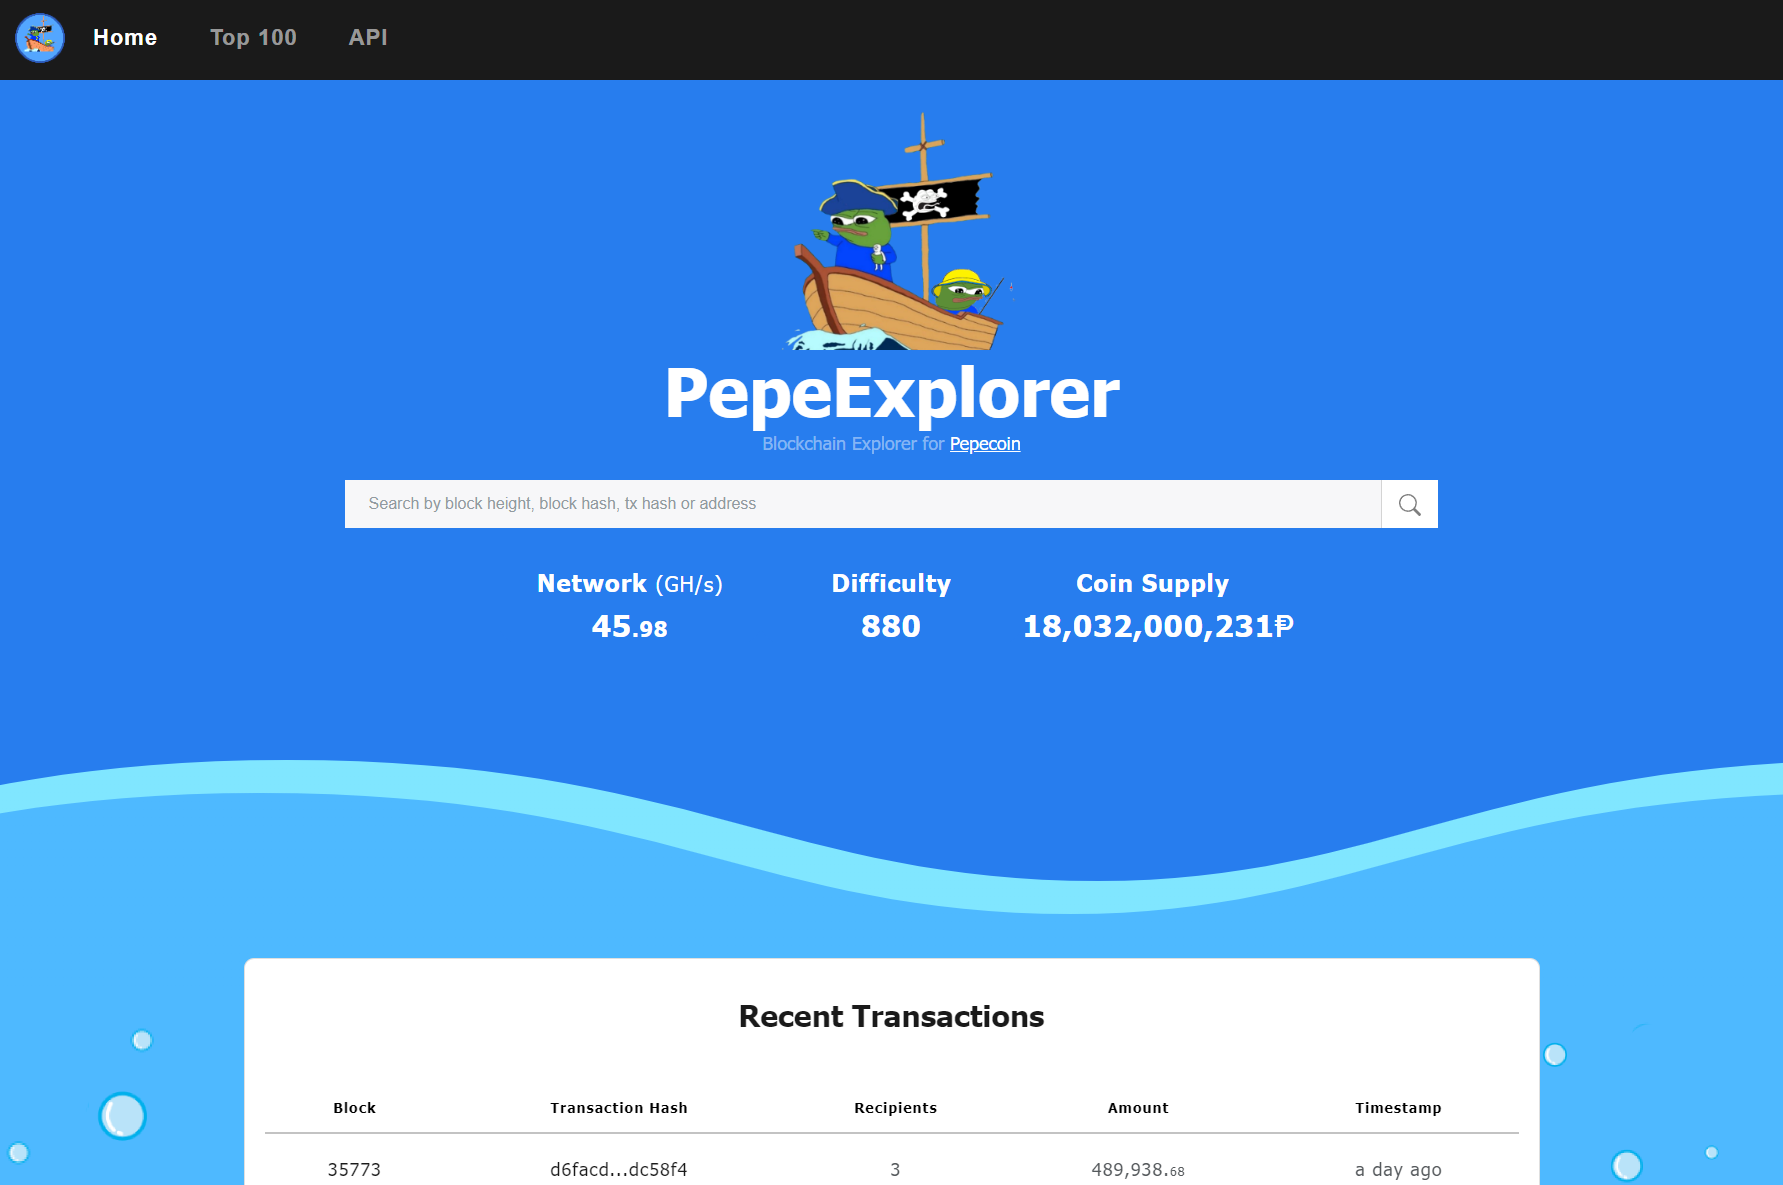 image of pepecoin explorer website